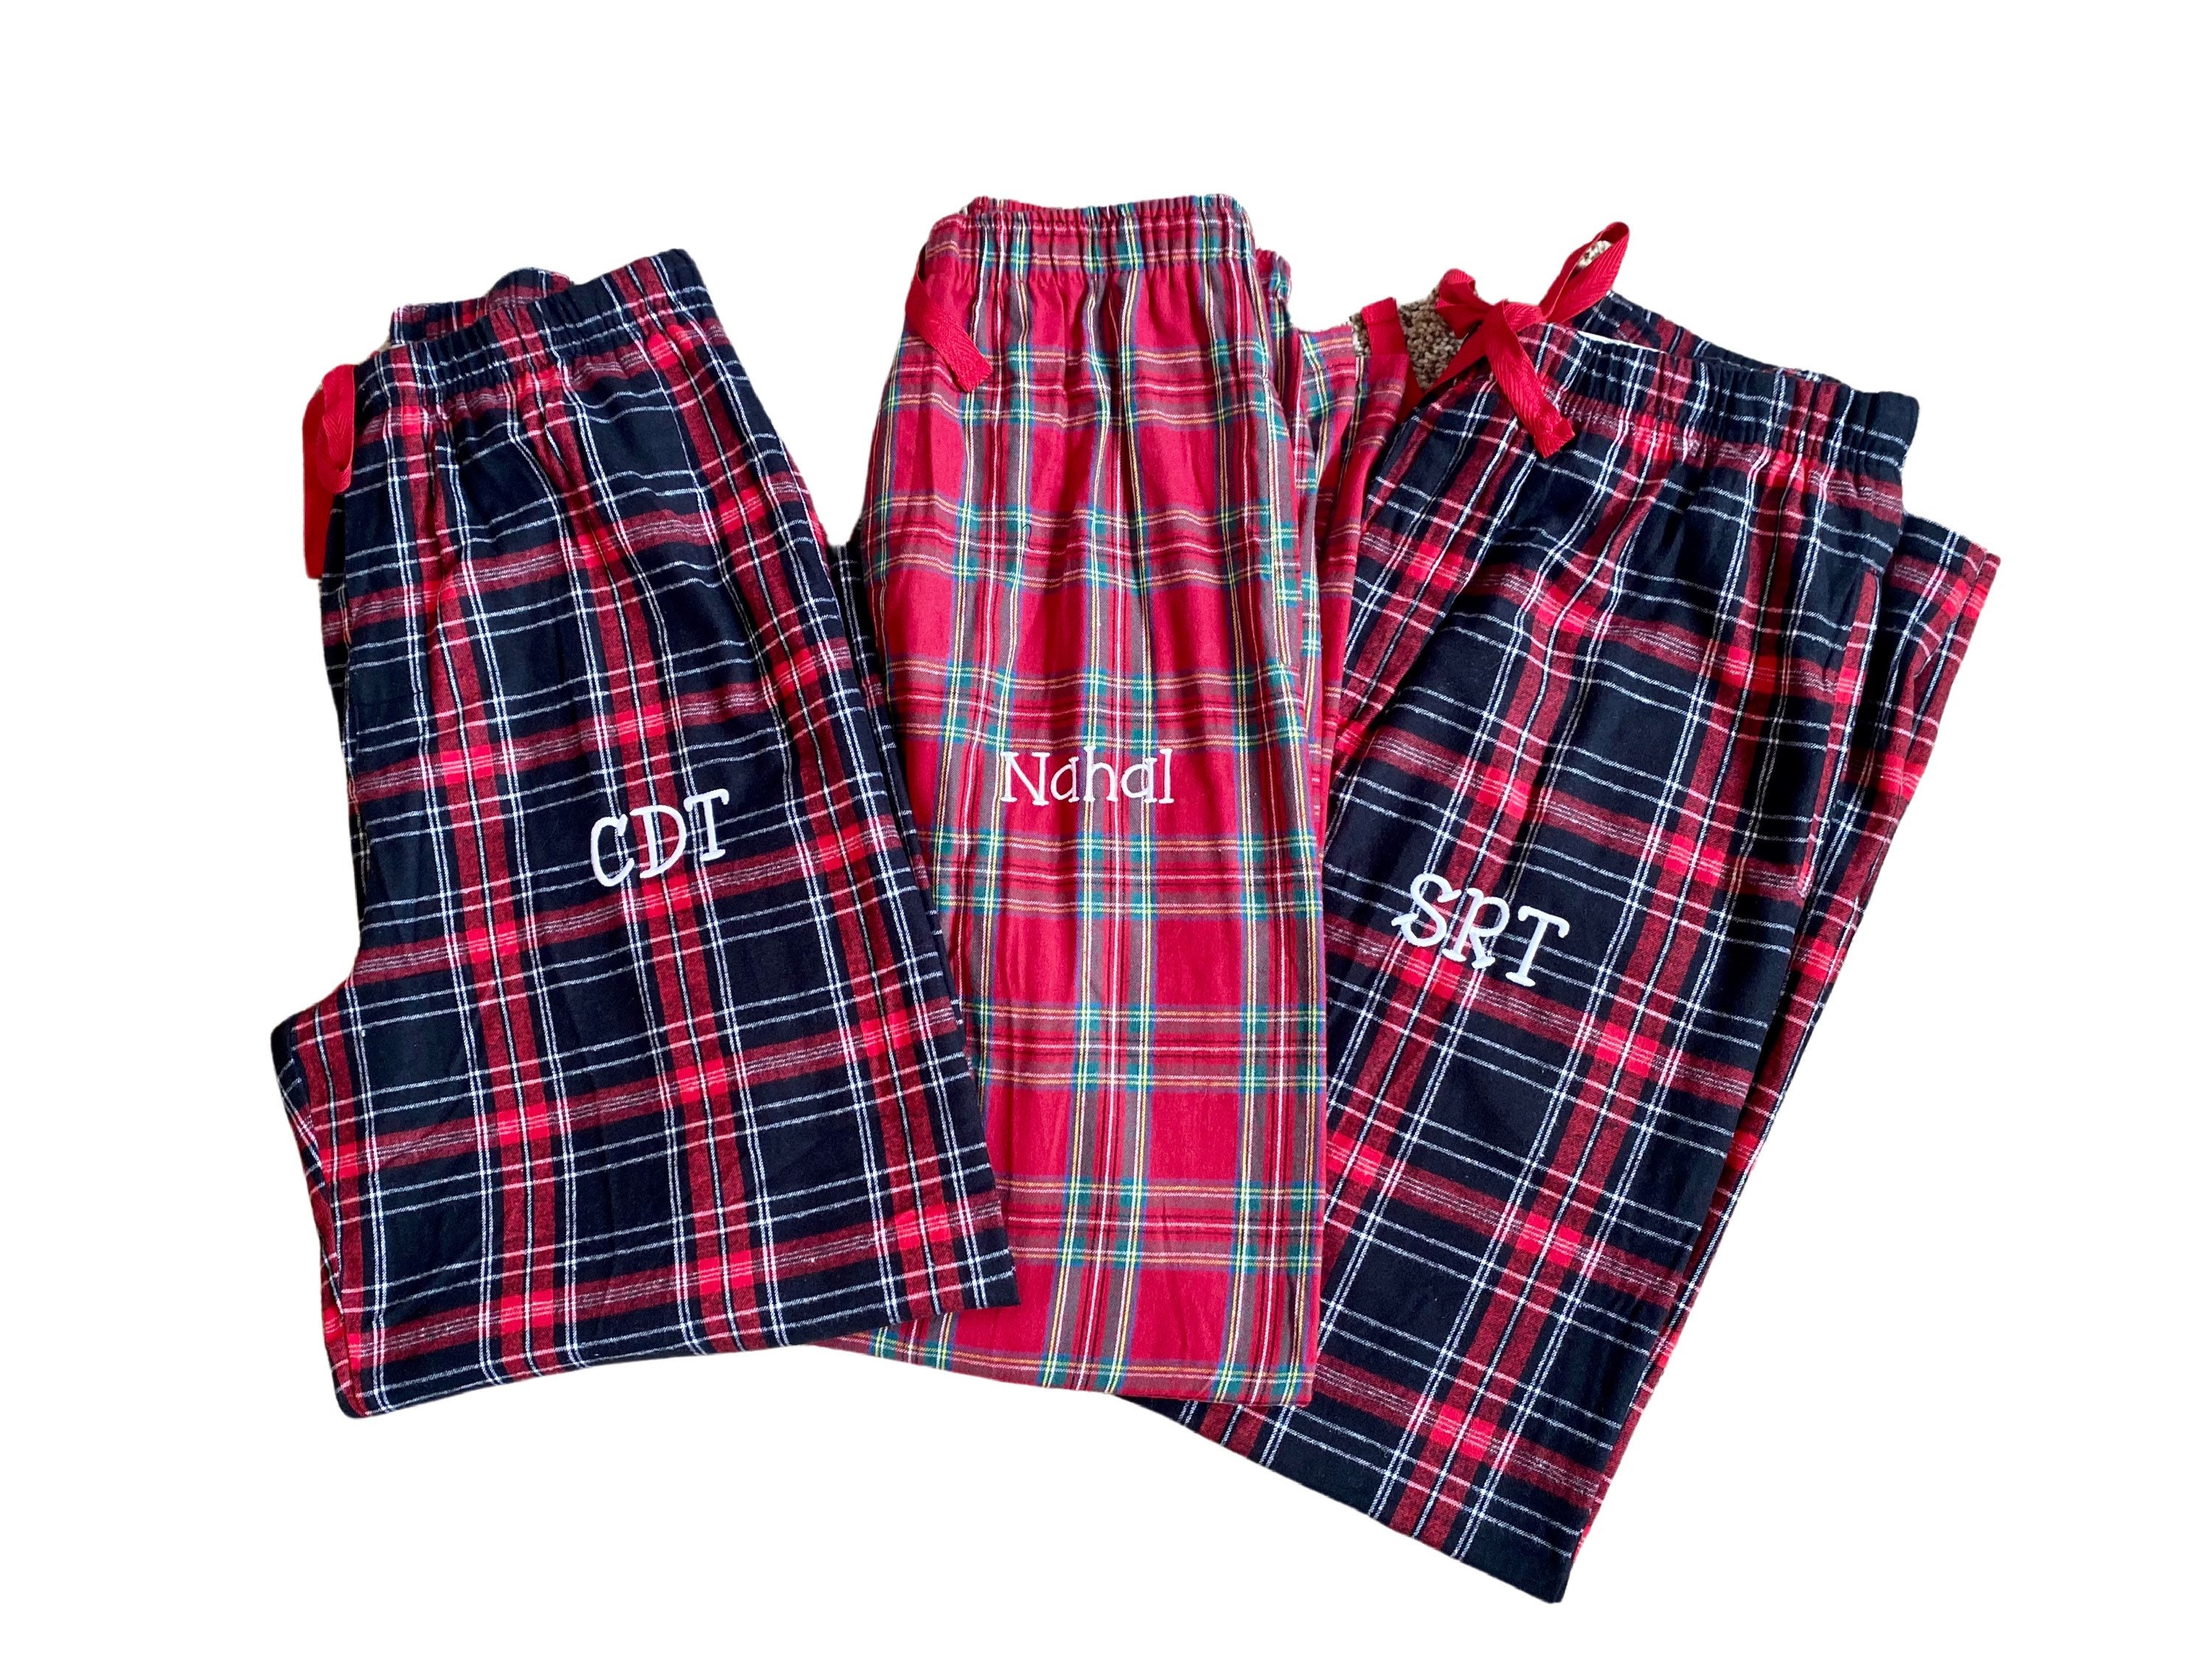 Personalized Pajama Pants / Monogrammed Plaid Pajama Pants